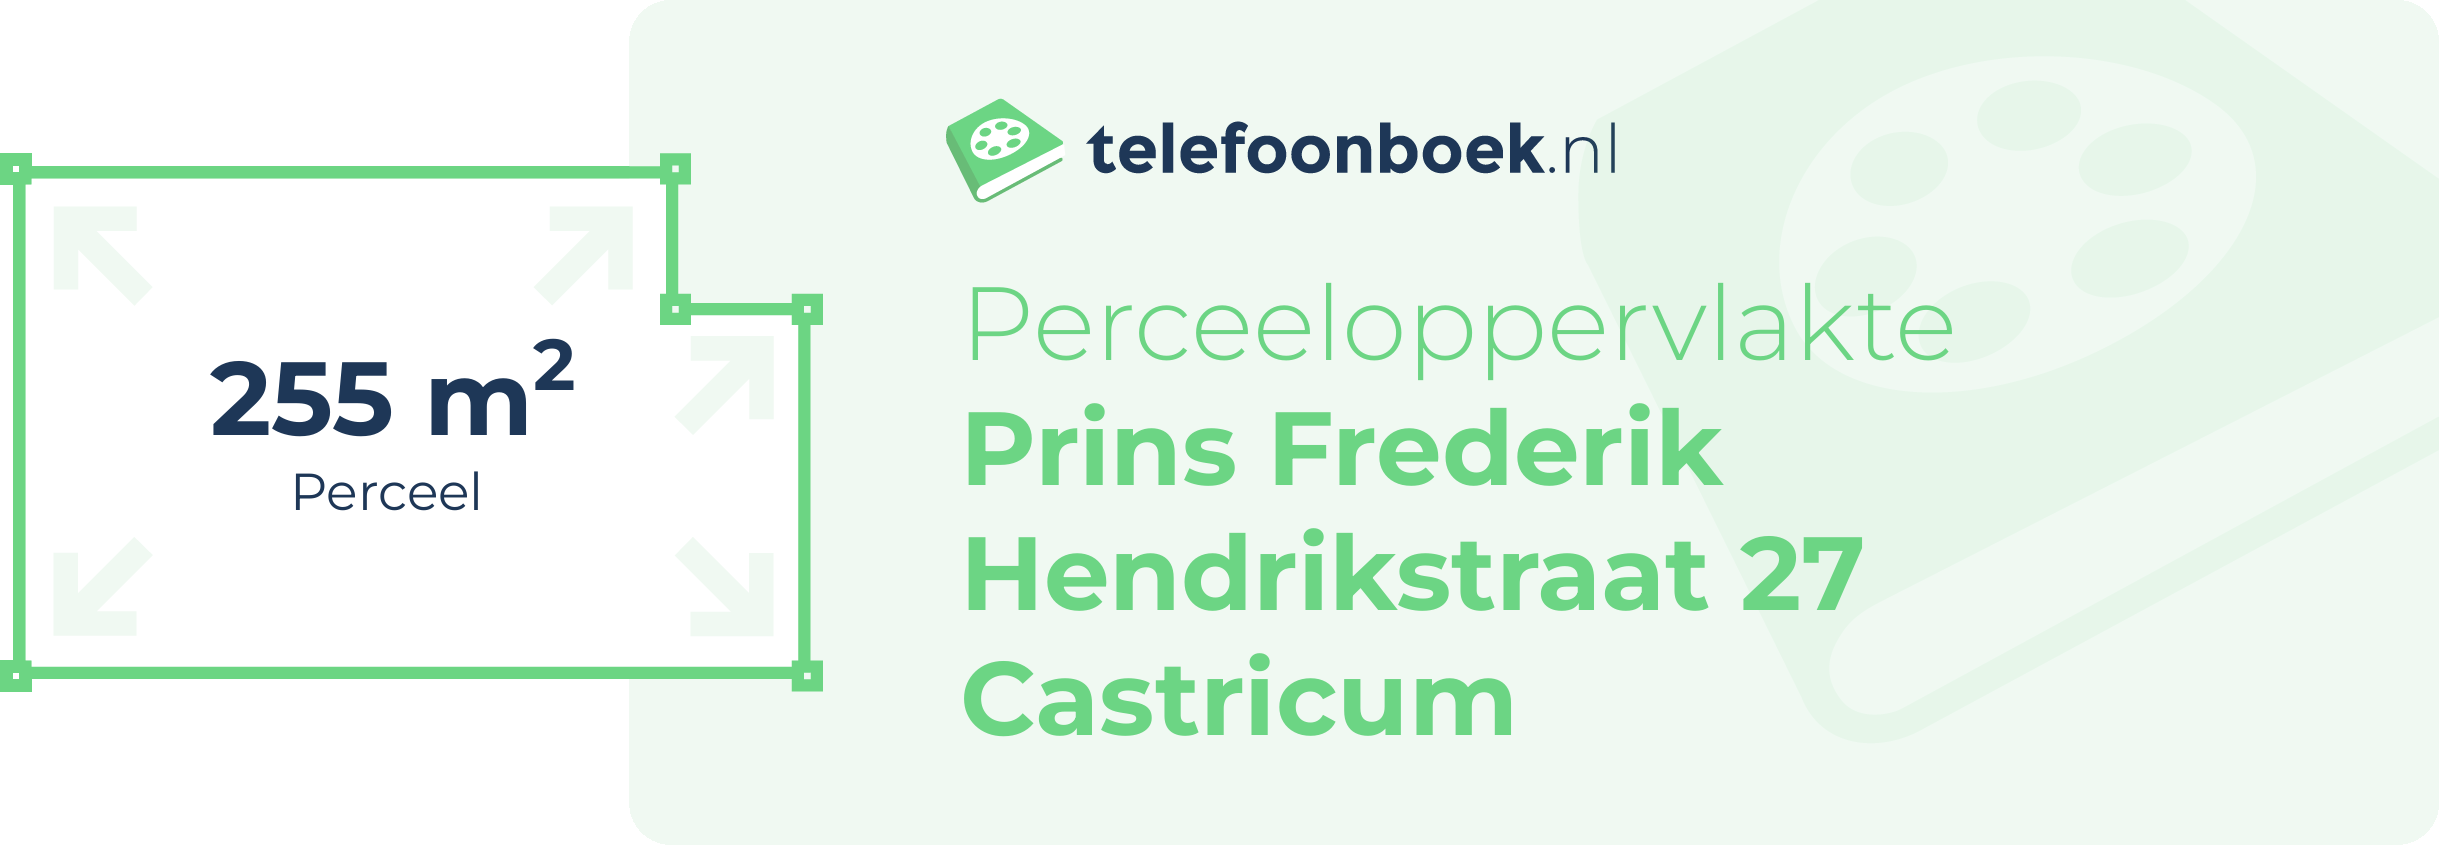 Perceeloppervlakte Prins Frederik Hendrikstraat 27 Castricum